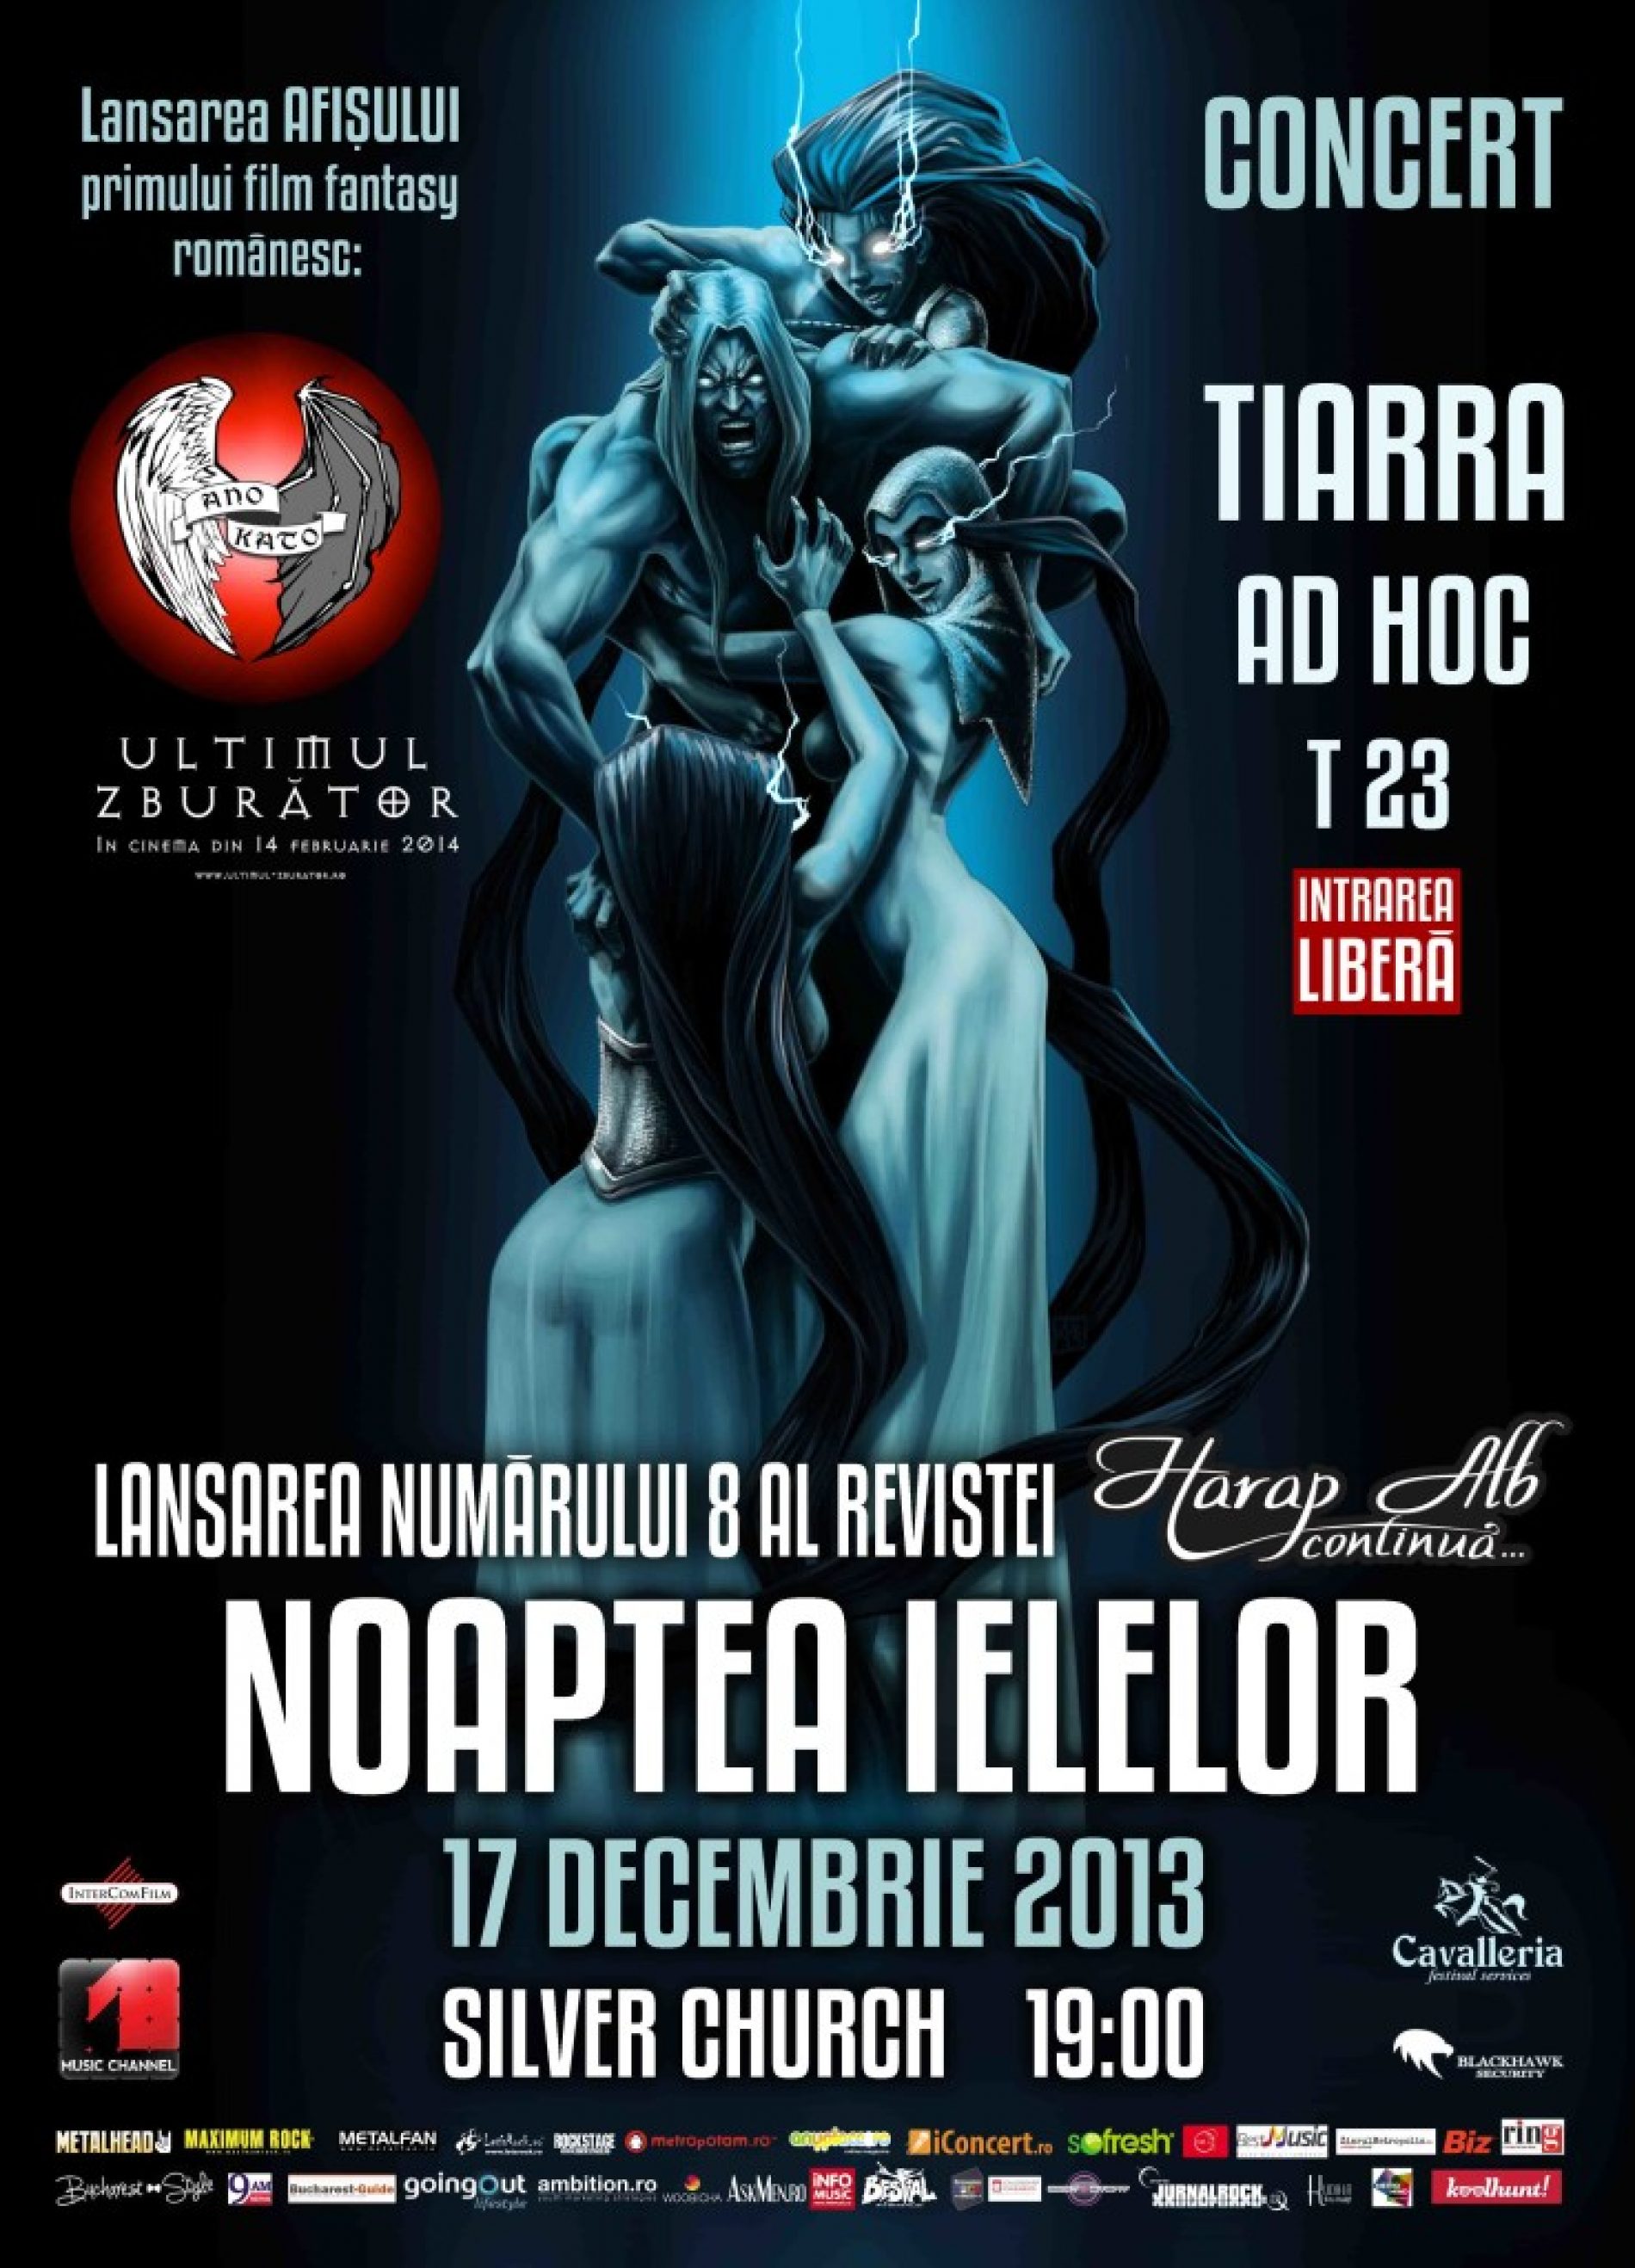 Ad-Hoc, Tiarra: program concert “Noaptea Ielelor”